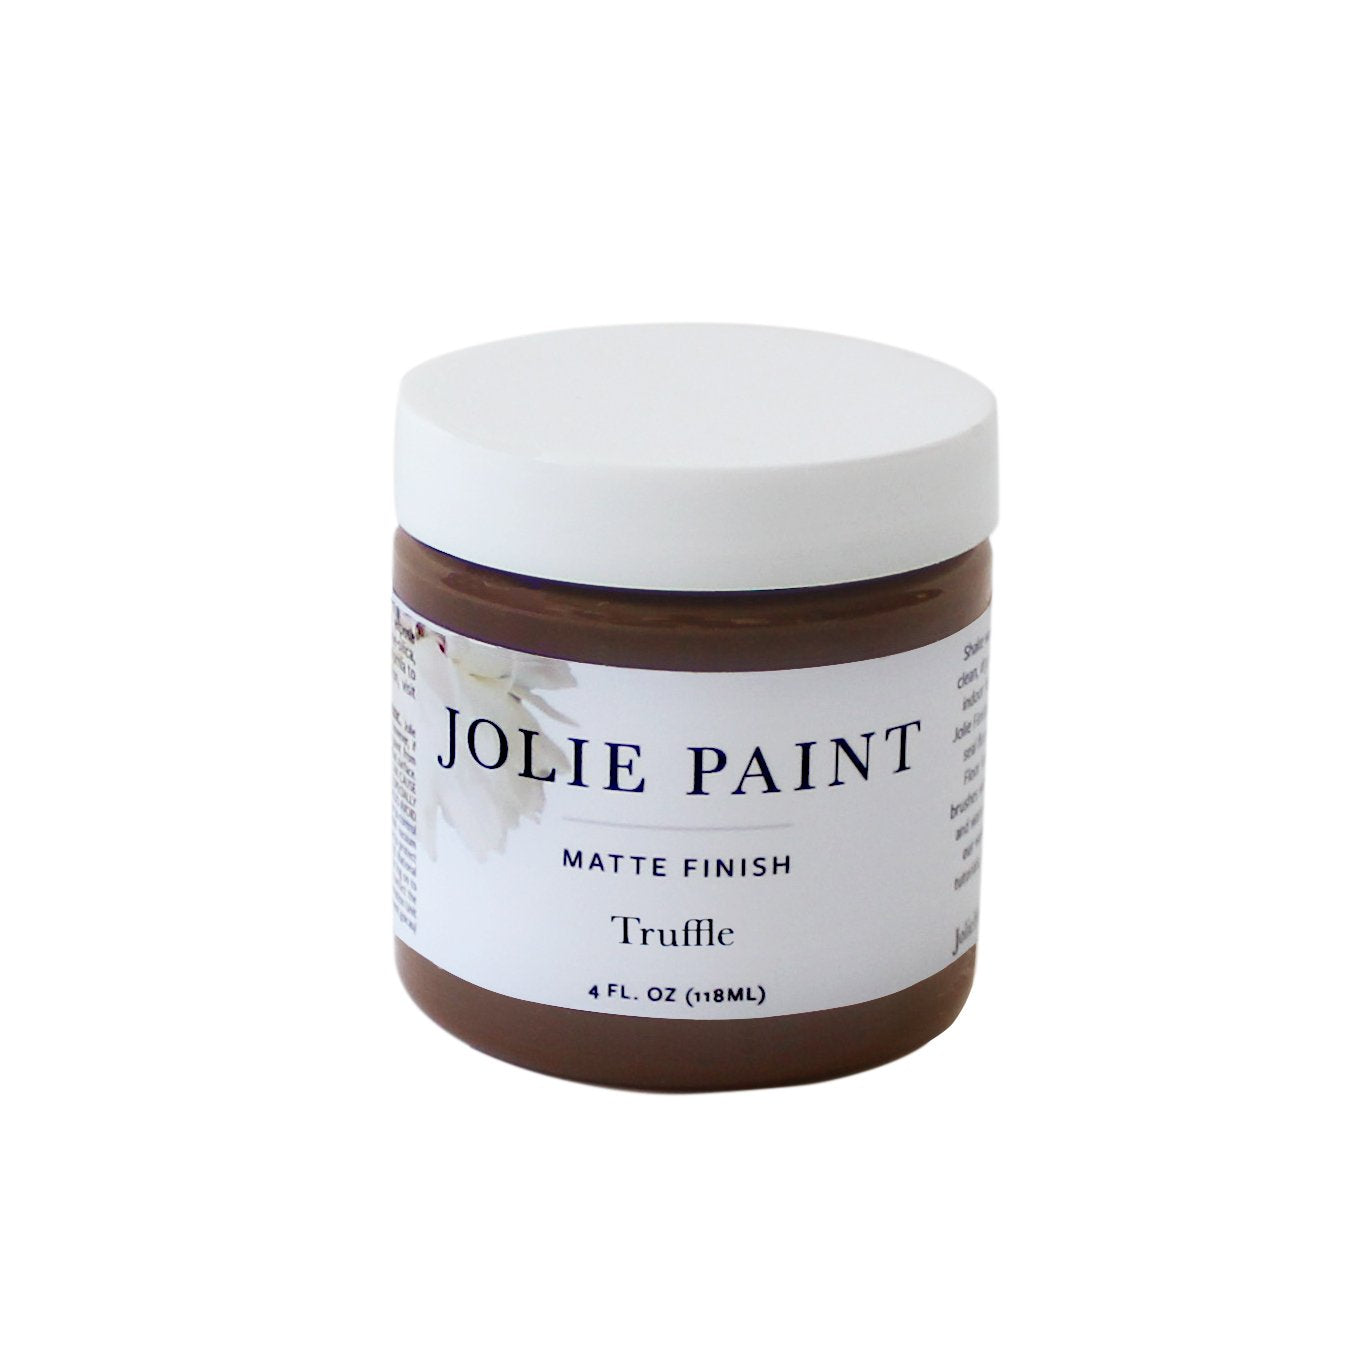 Jolie Paint - Matte Finish - Truffle